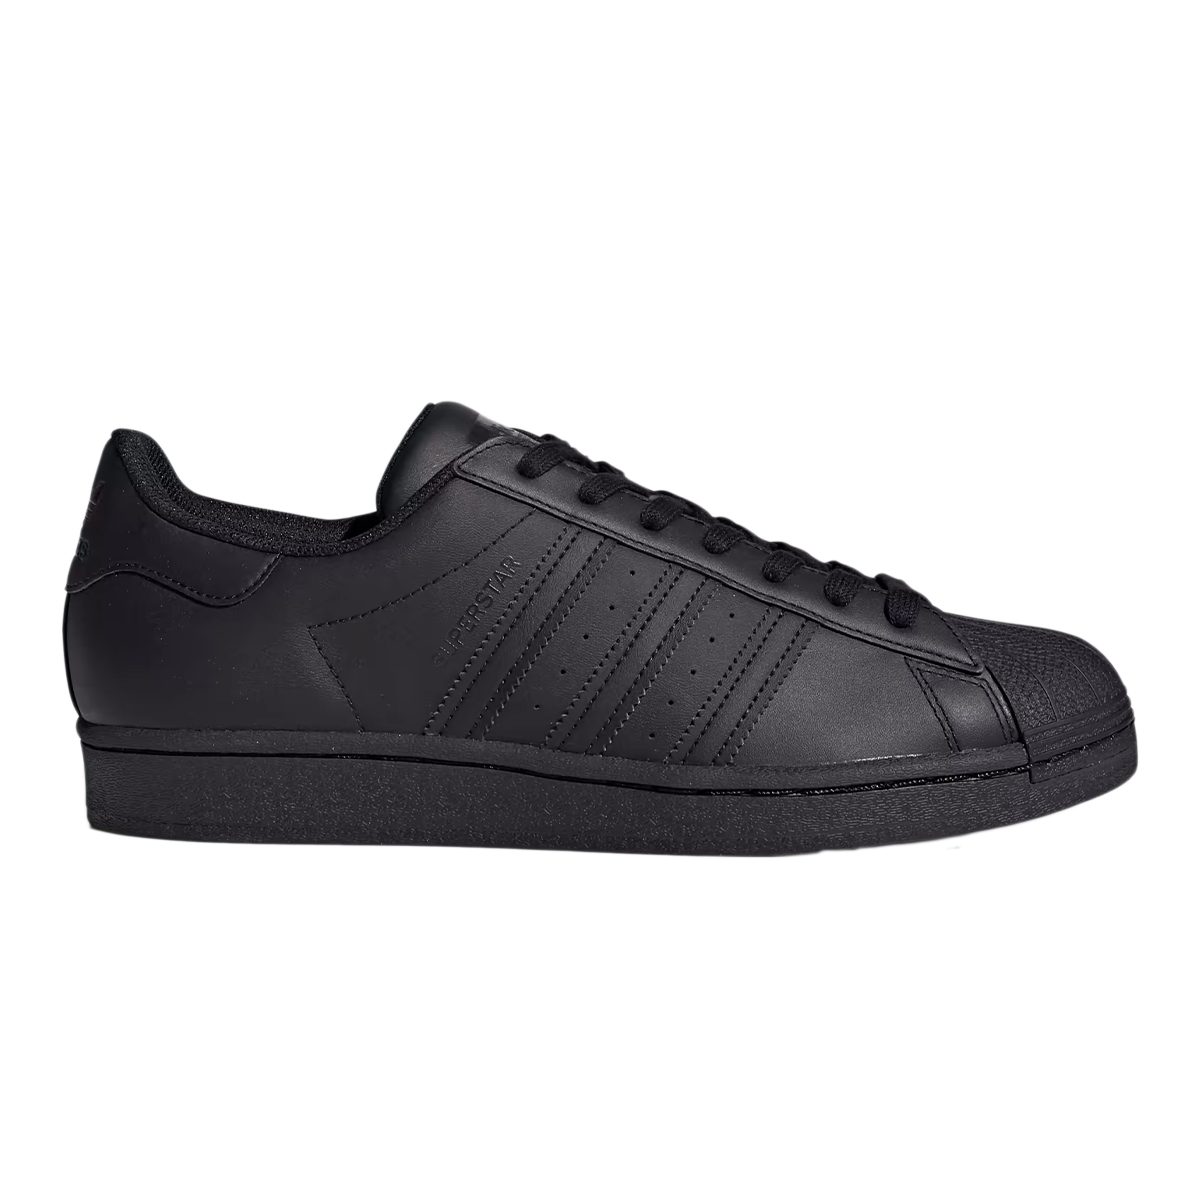 Adidas Superstar Leather ADV Shoe - Black/Black